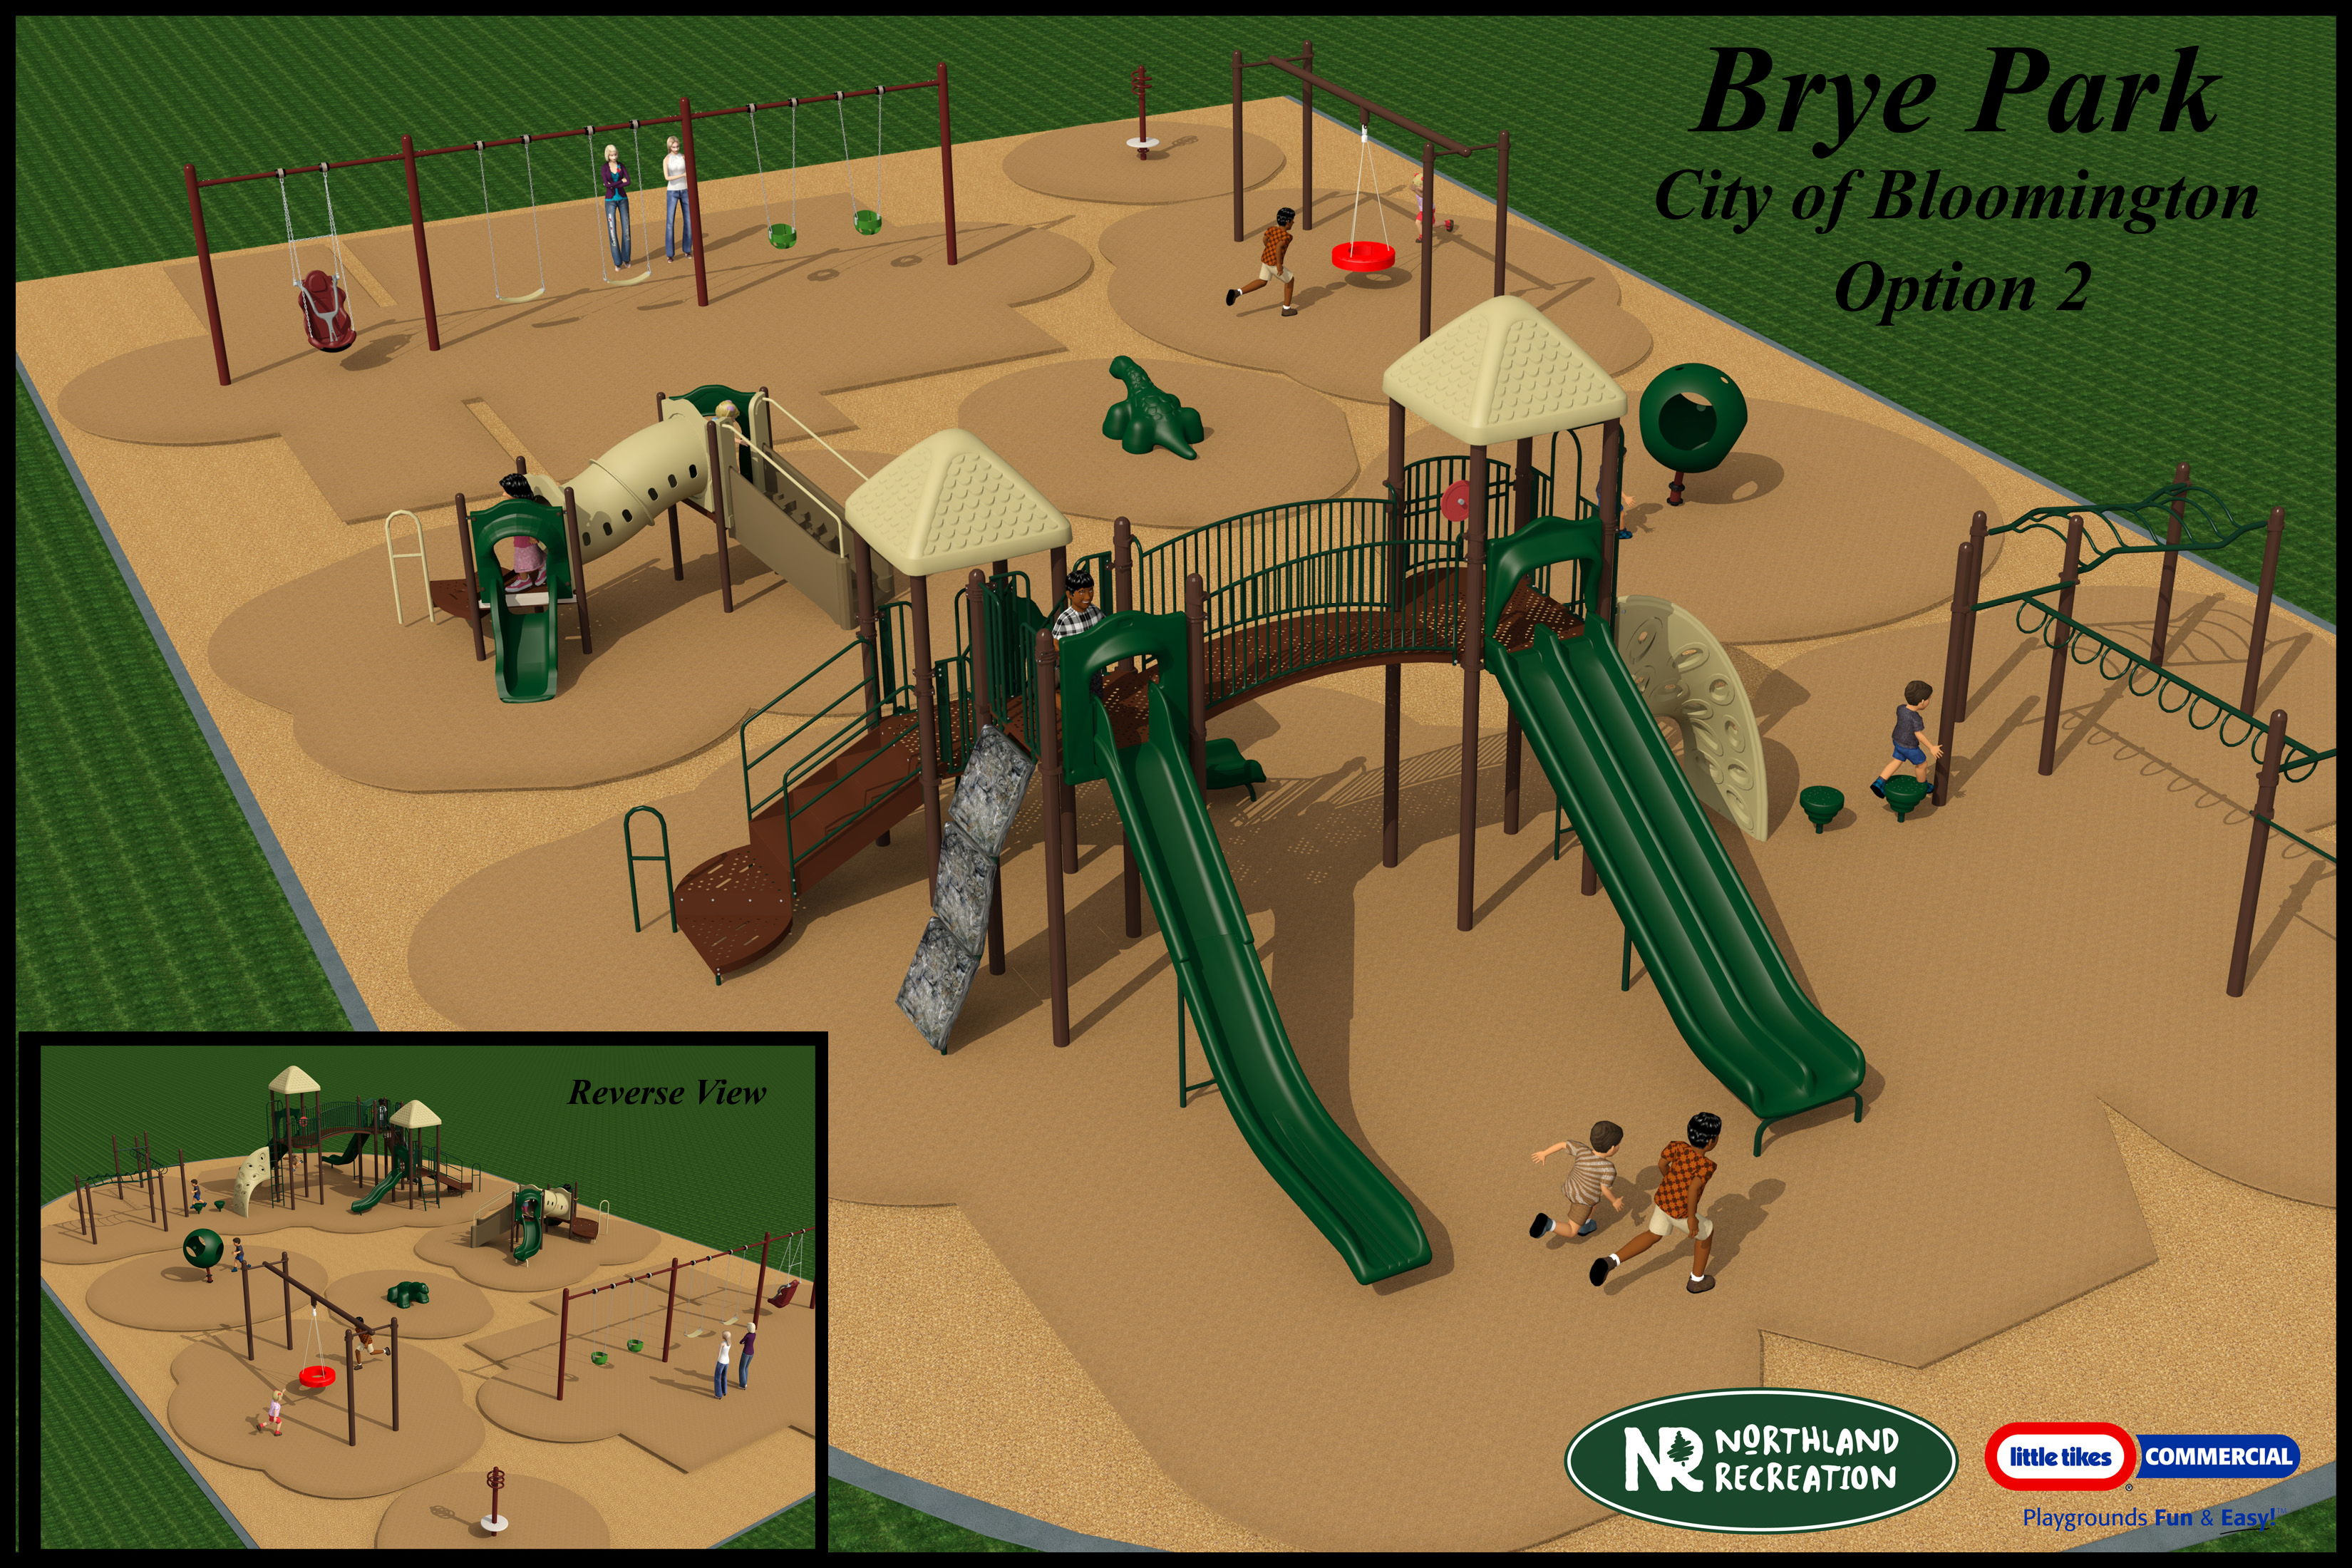 Brye Park option 2